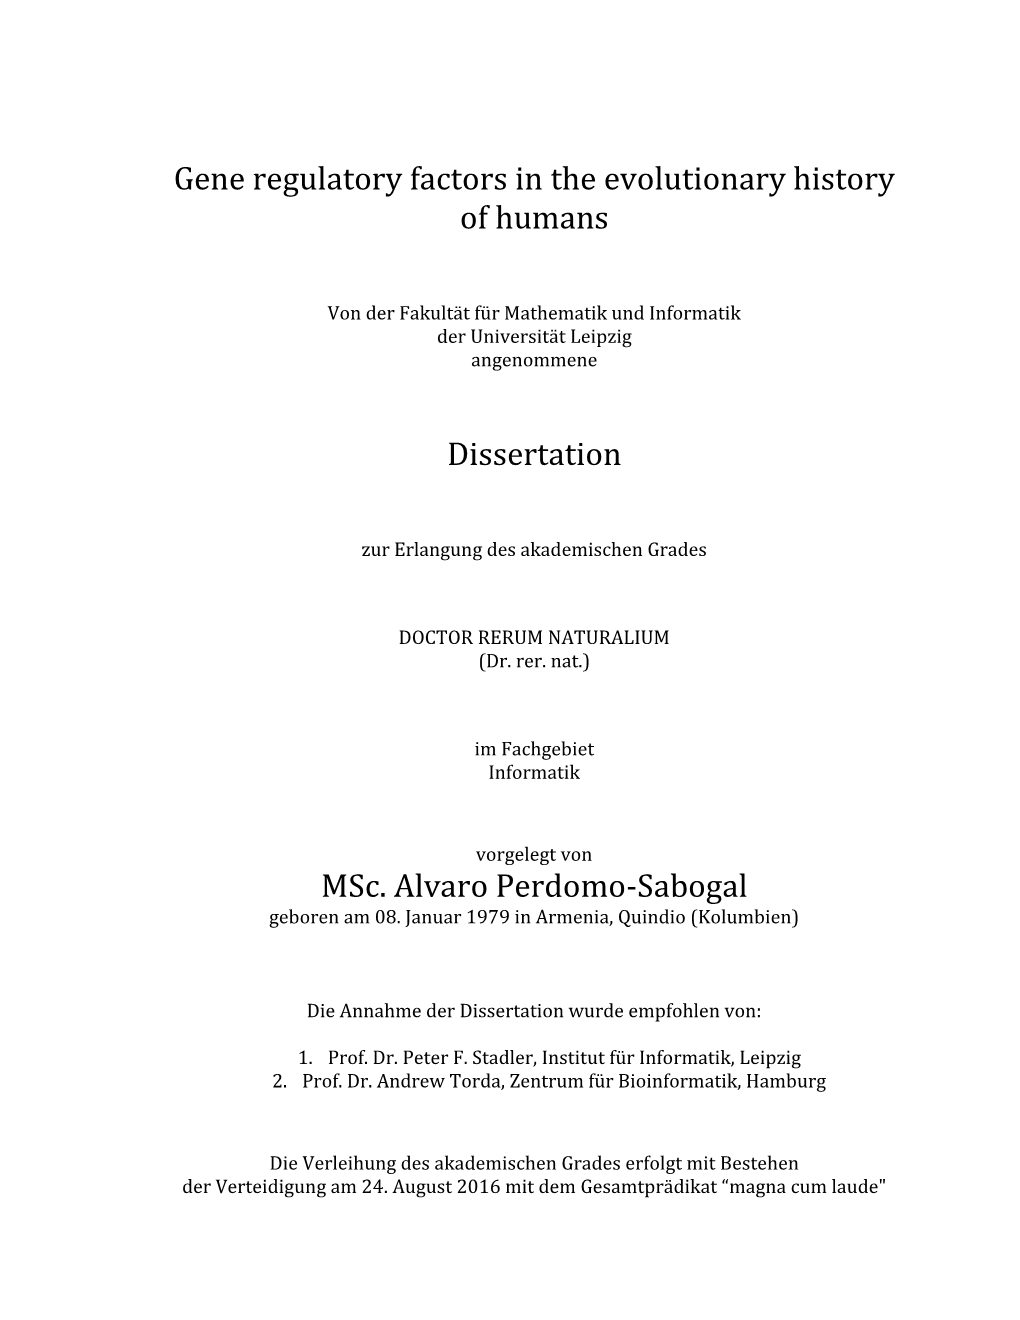 Gene Regulatory Factors in the Evolutionary History of Humans